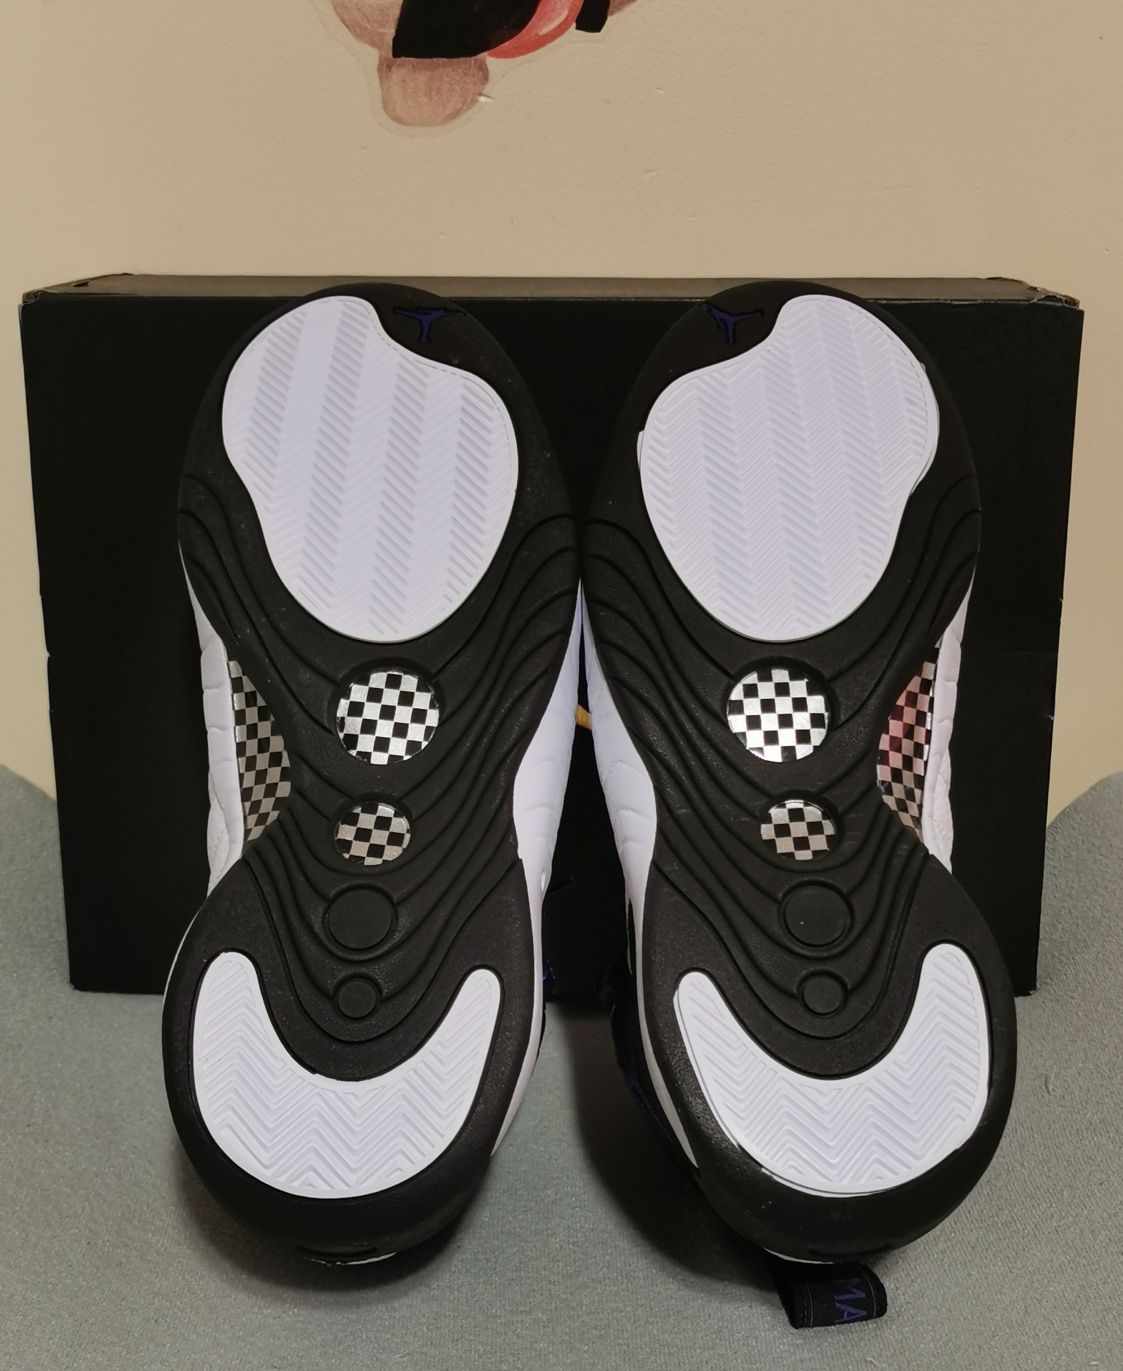 Jordan Jumpman Pro buty sneakersy wysokie do koszykówki 44 28cm  nowe